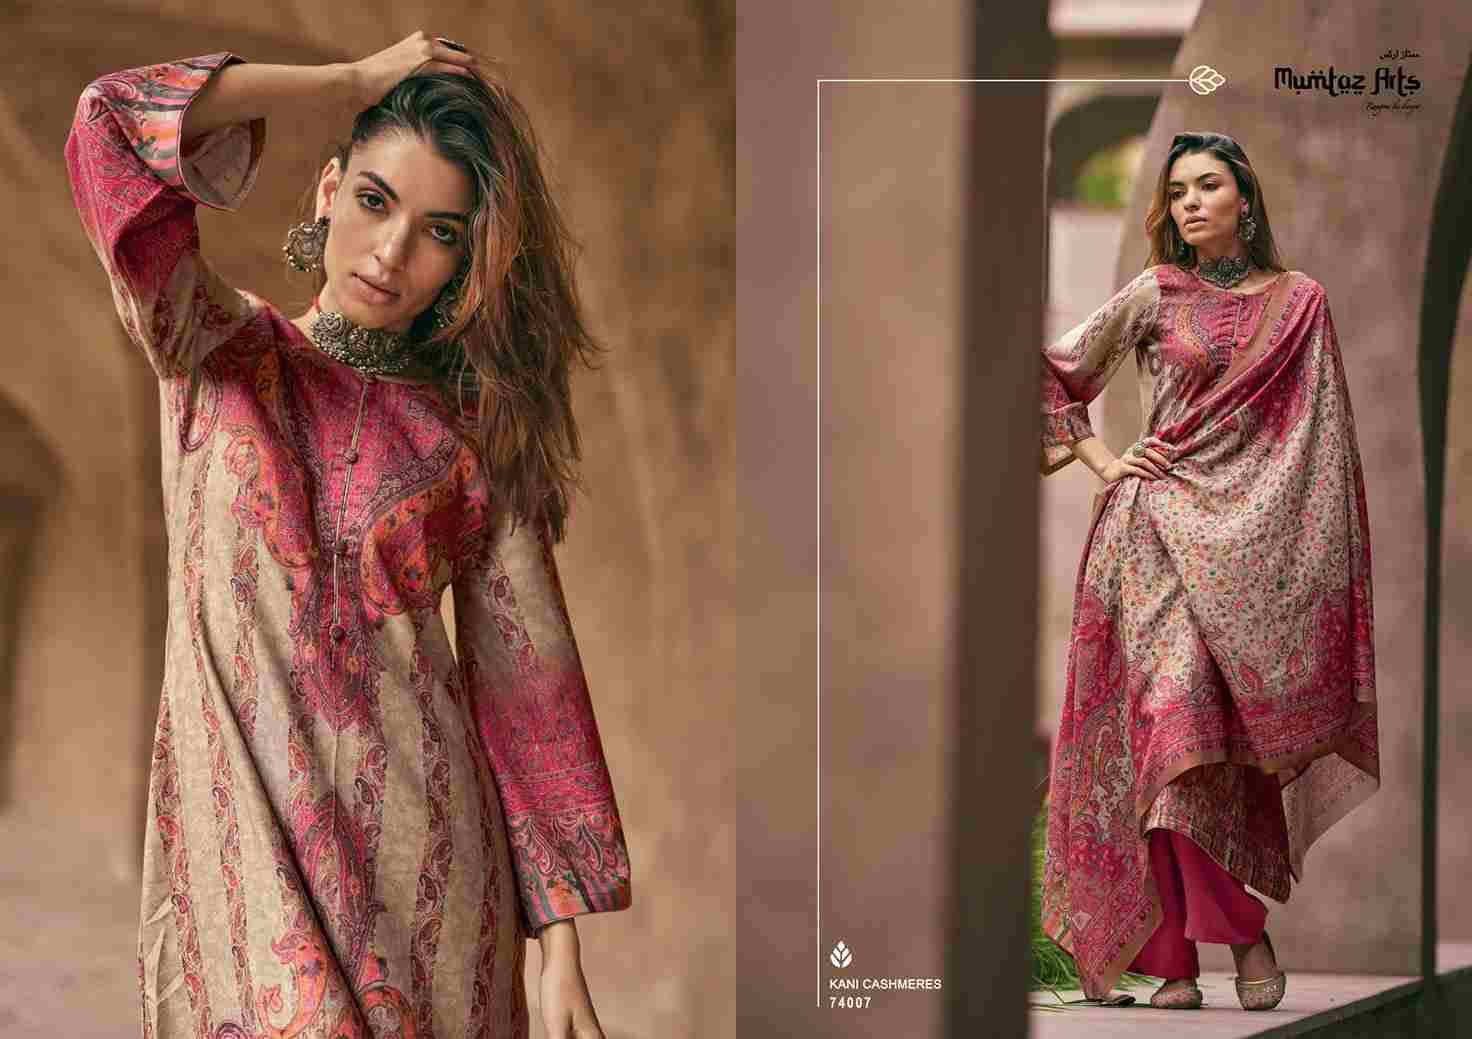 Kani Cashmeres By Mumtaz Arts 74001 To 74007 Series Beautiful Pakistani Suits Colorful Stylish Fancy Casual Wear & Ethnic Wear Pure Pashmina Digital Print Dresses At Wholesale Price